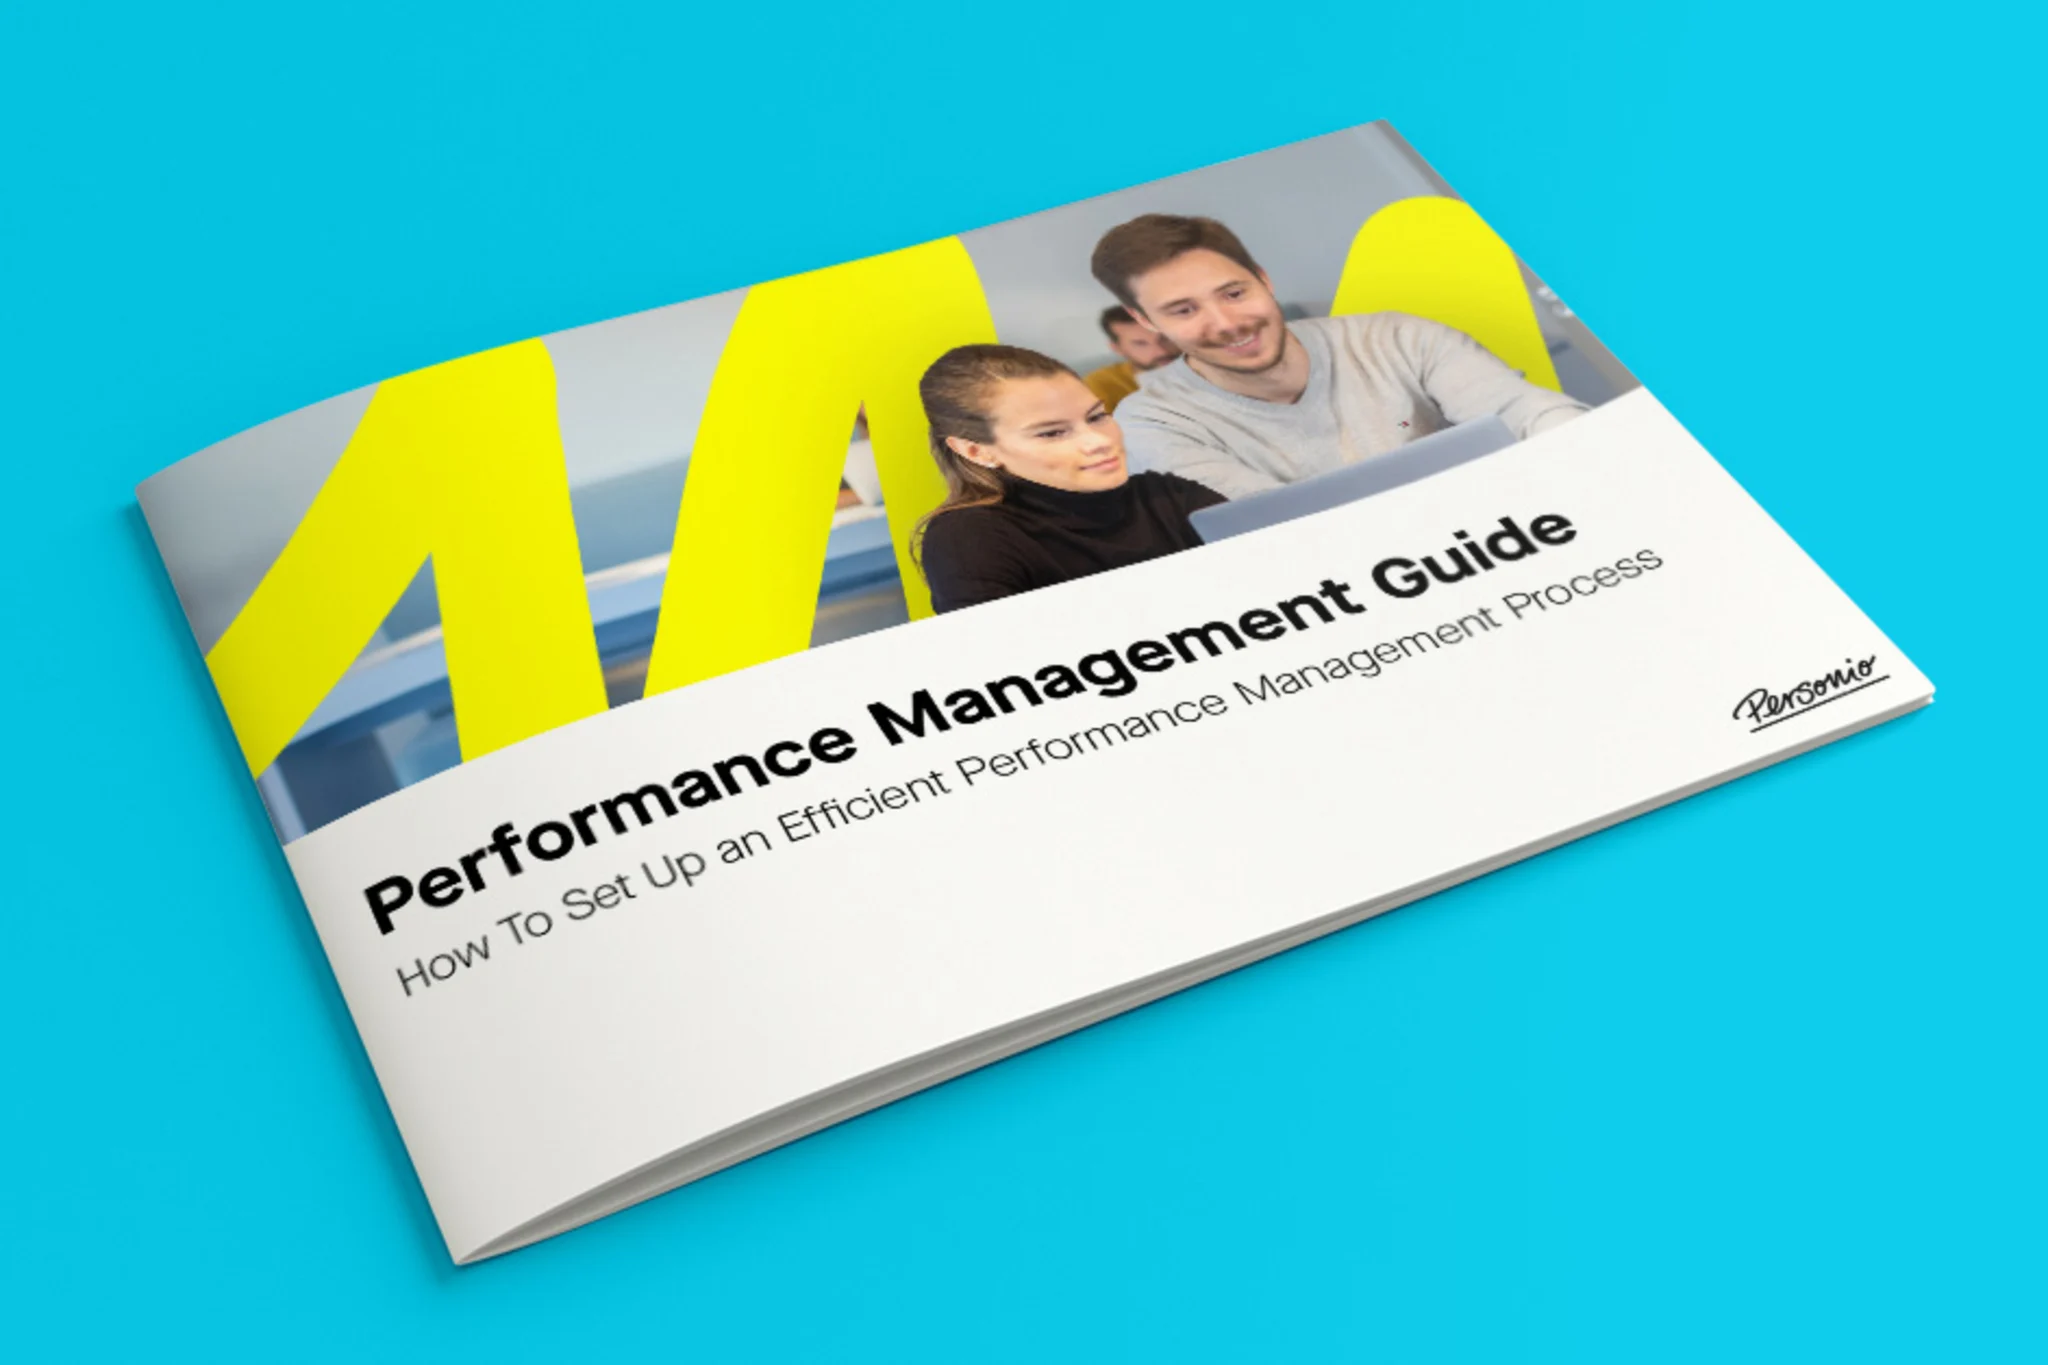 performance management guide personio